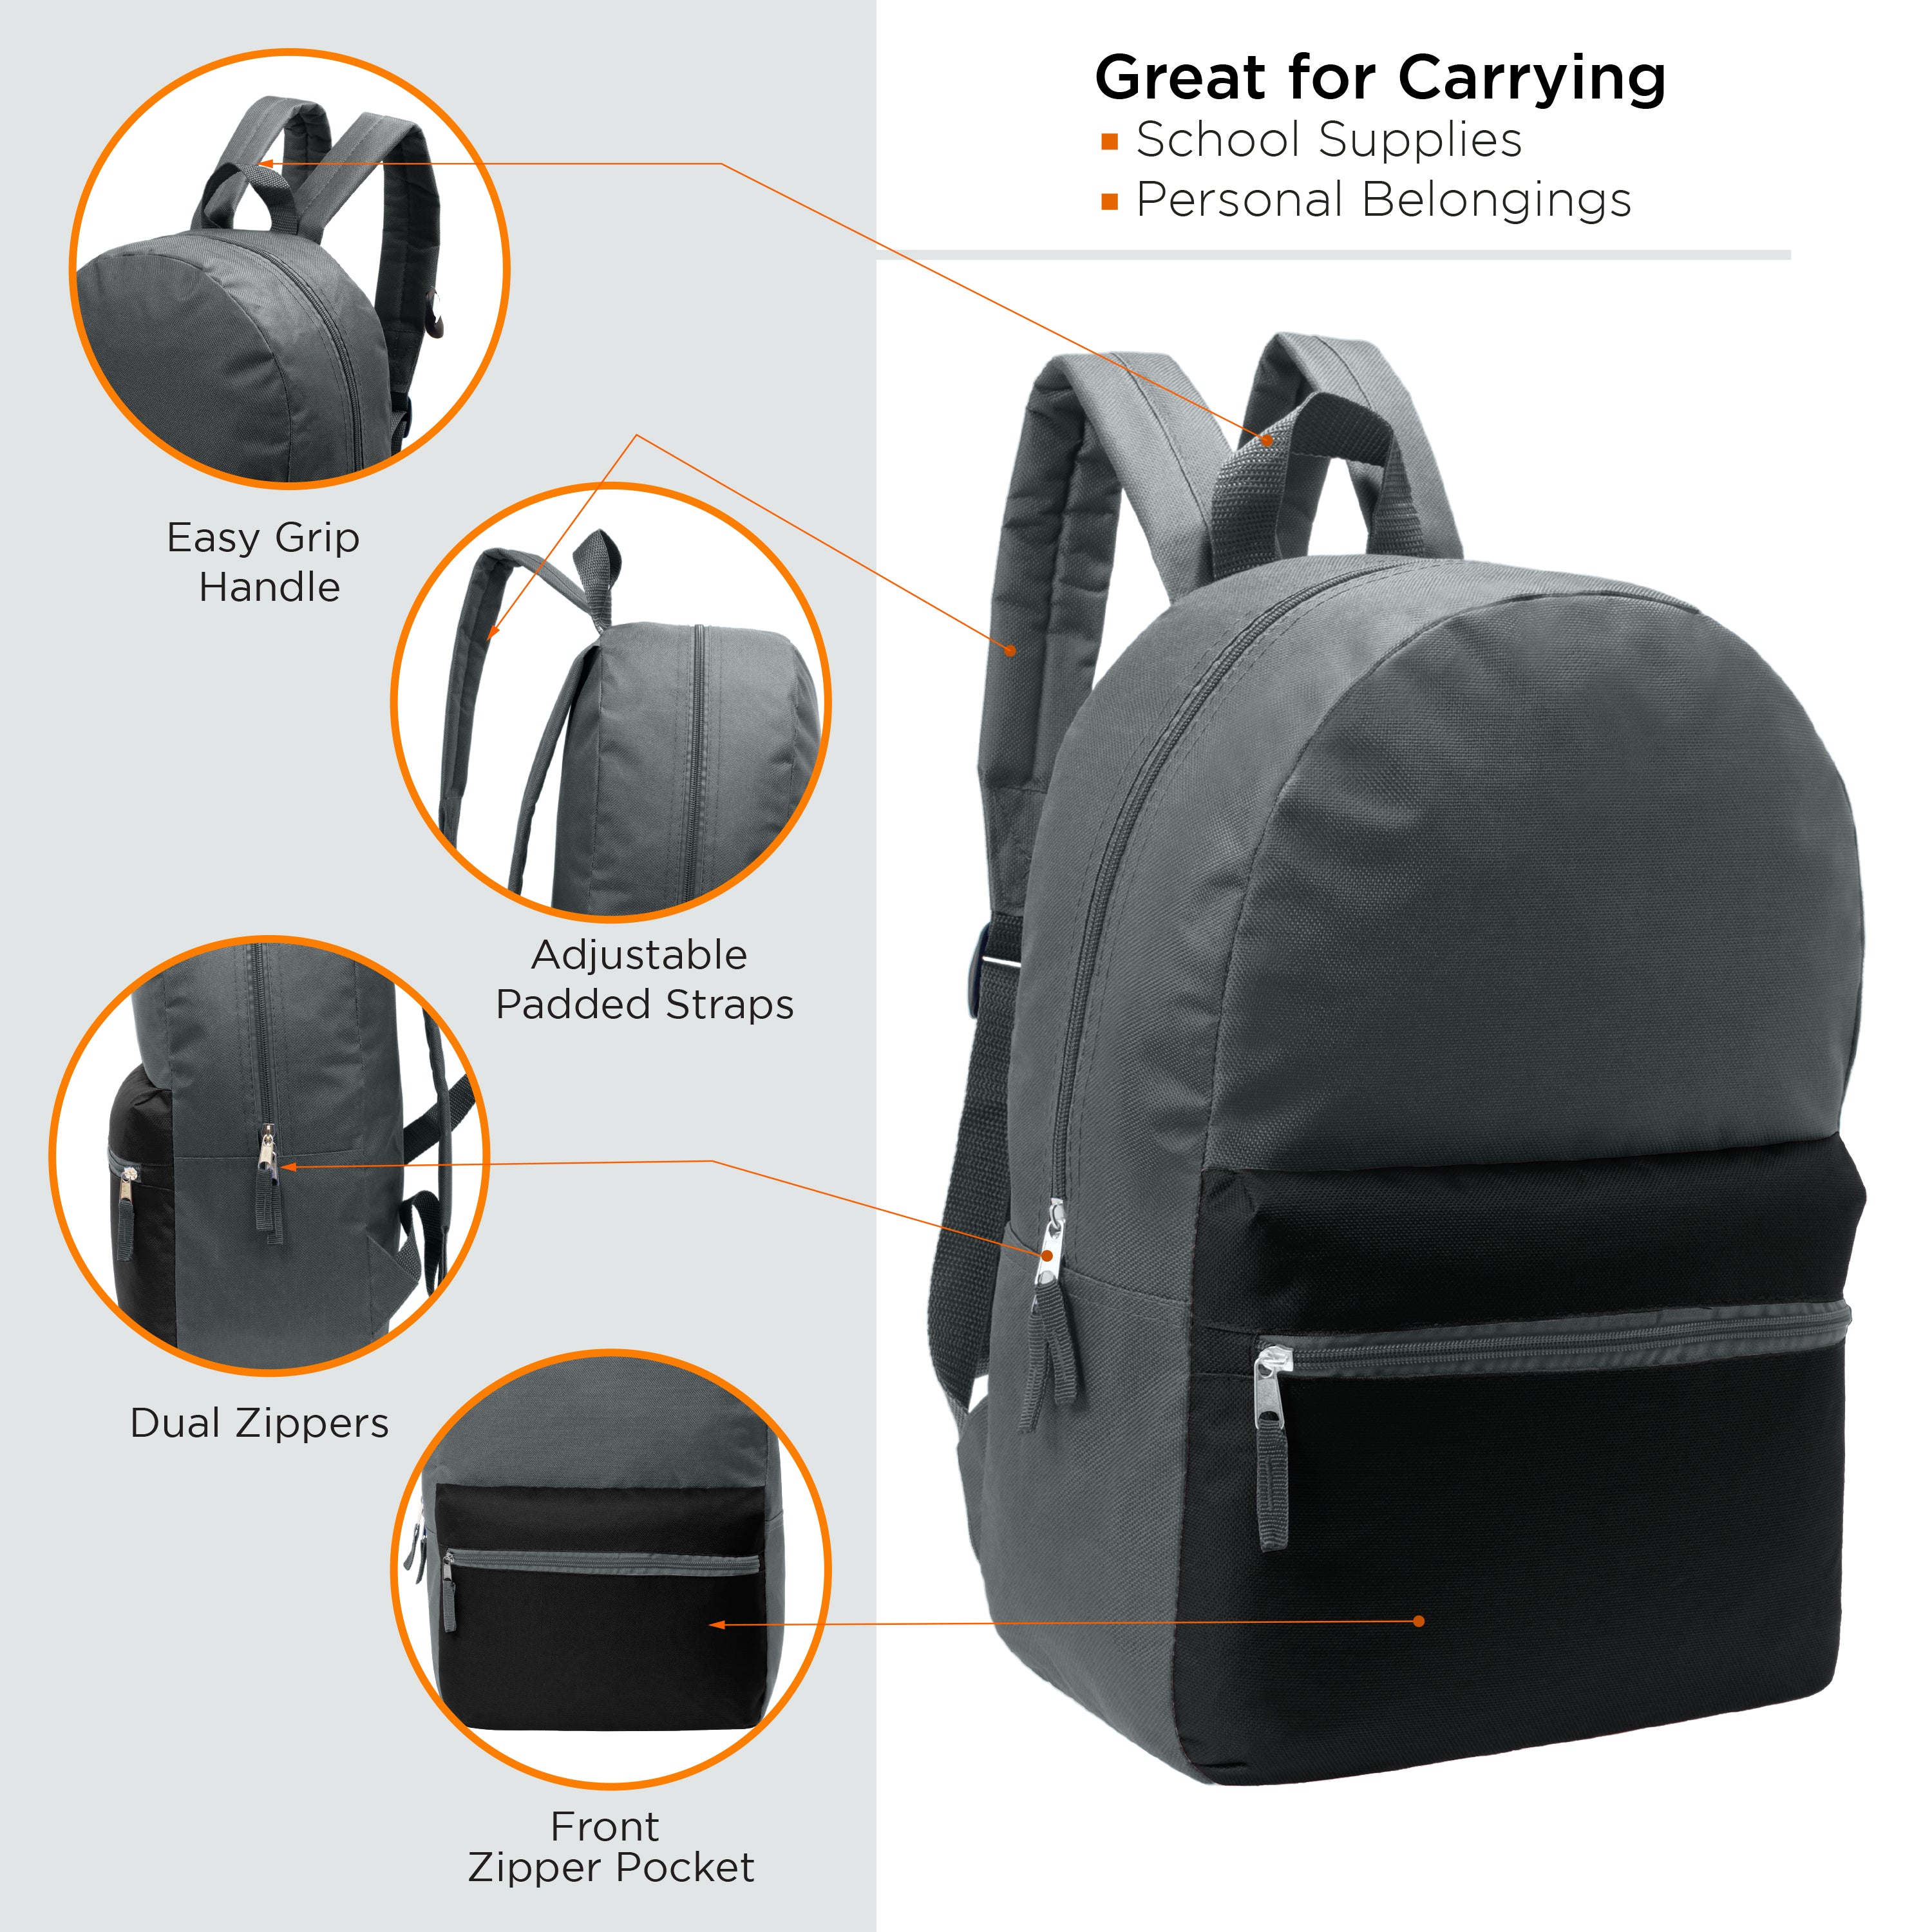 17" Kids Basic Wholesale Backpack in 6 Boy Colors 2 Tone - Bulk Case of 24 Backpacks